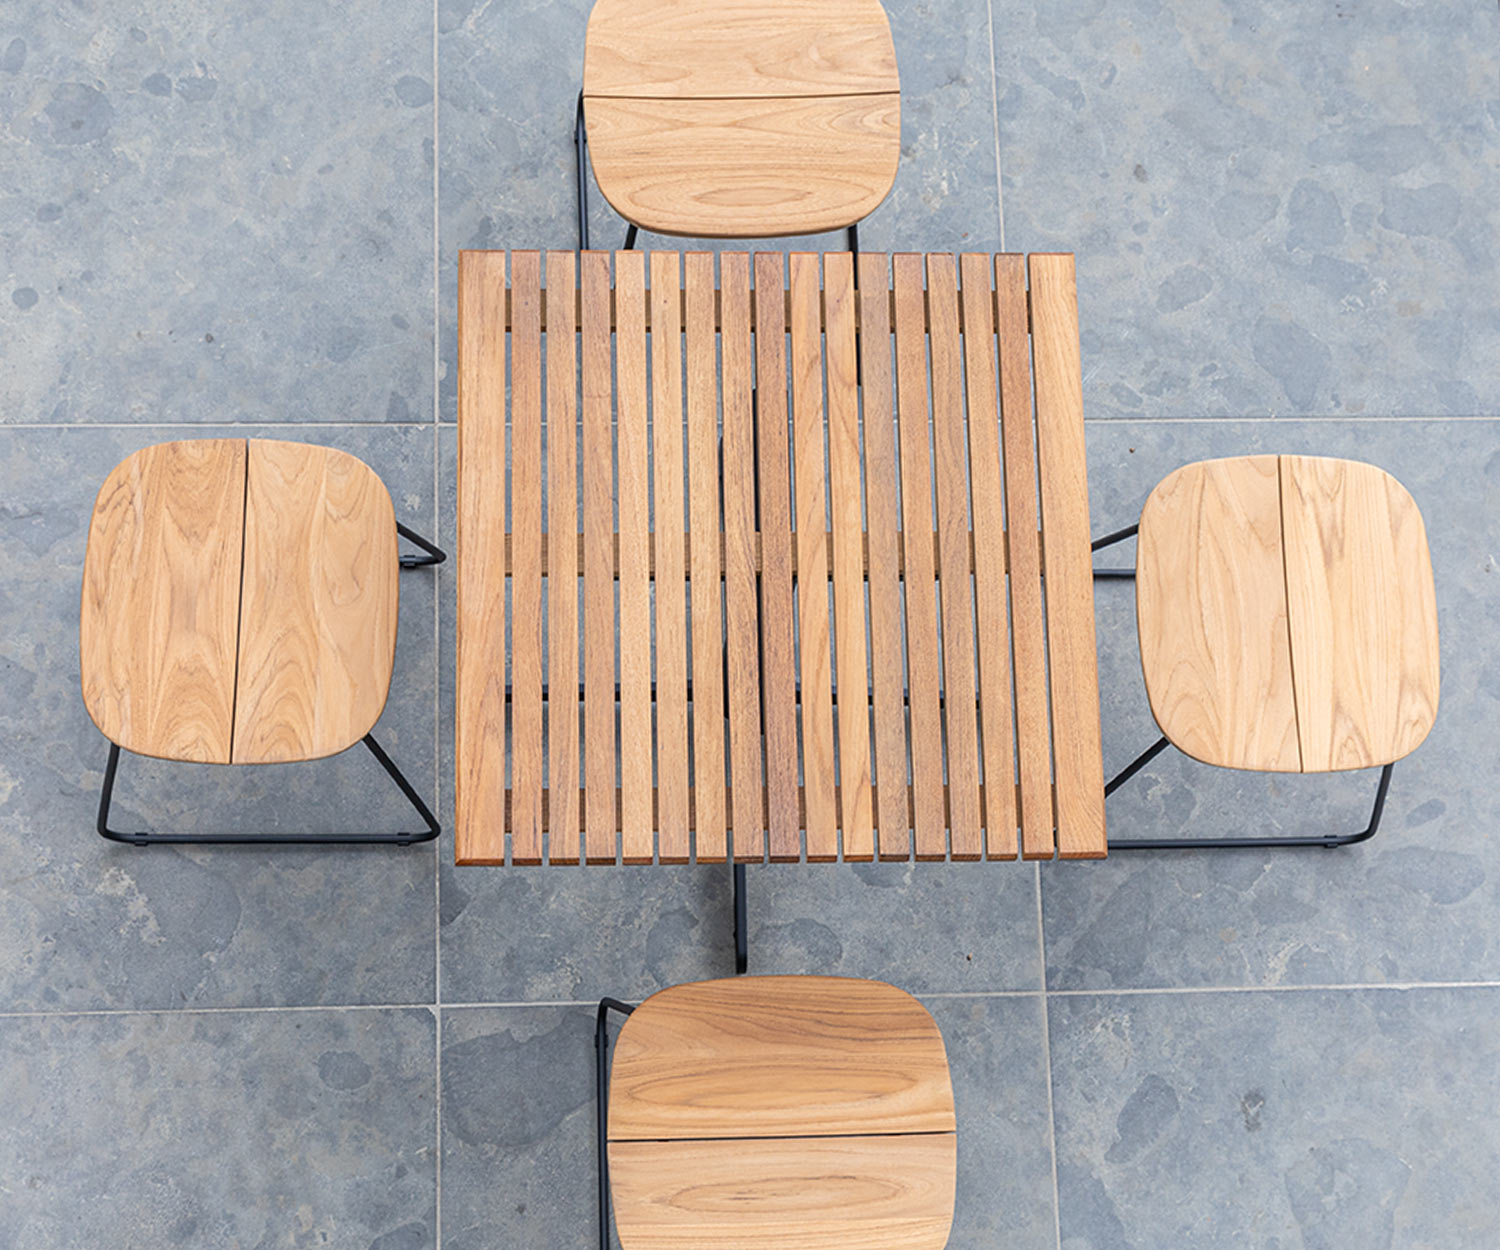 Exclusif Oasiq Bryggen Chaise de jardin design avec structure en acier inoxydable sur terrasse